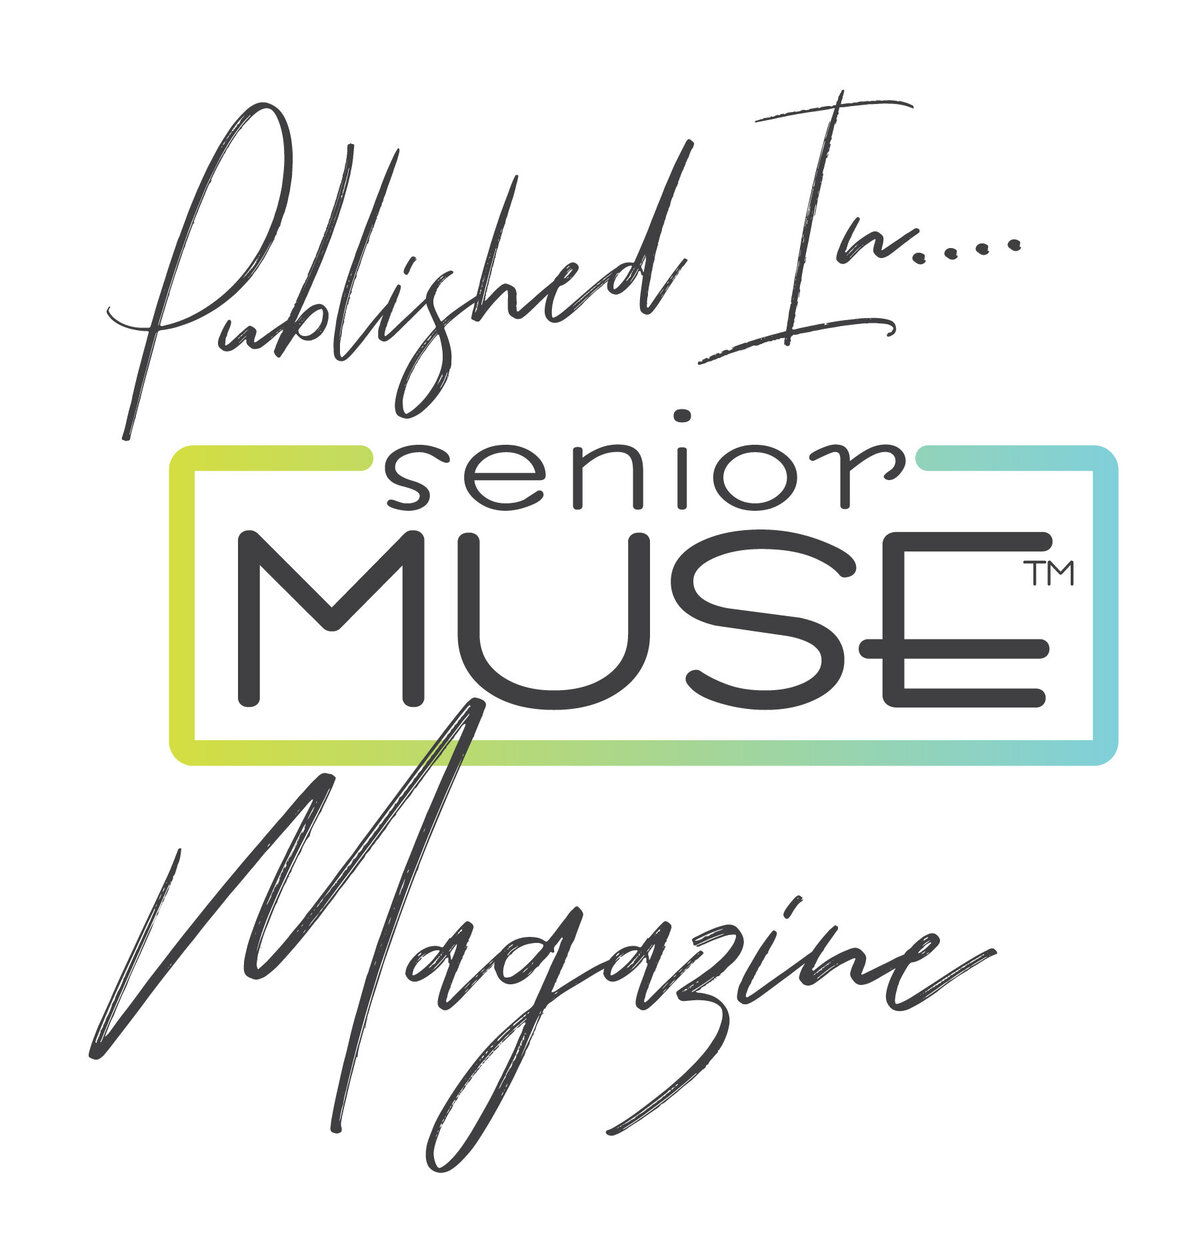 Senior Muse publication